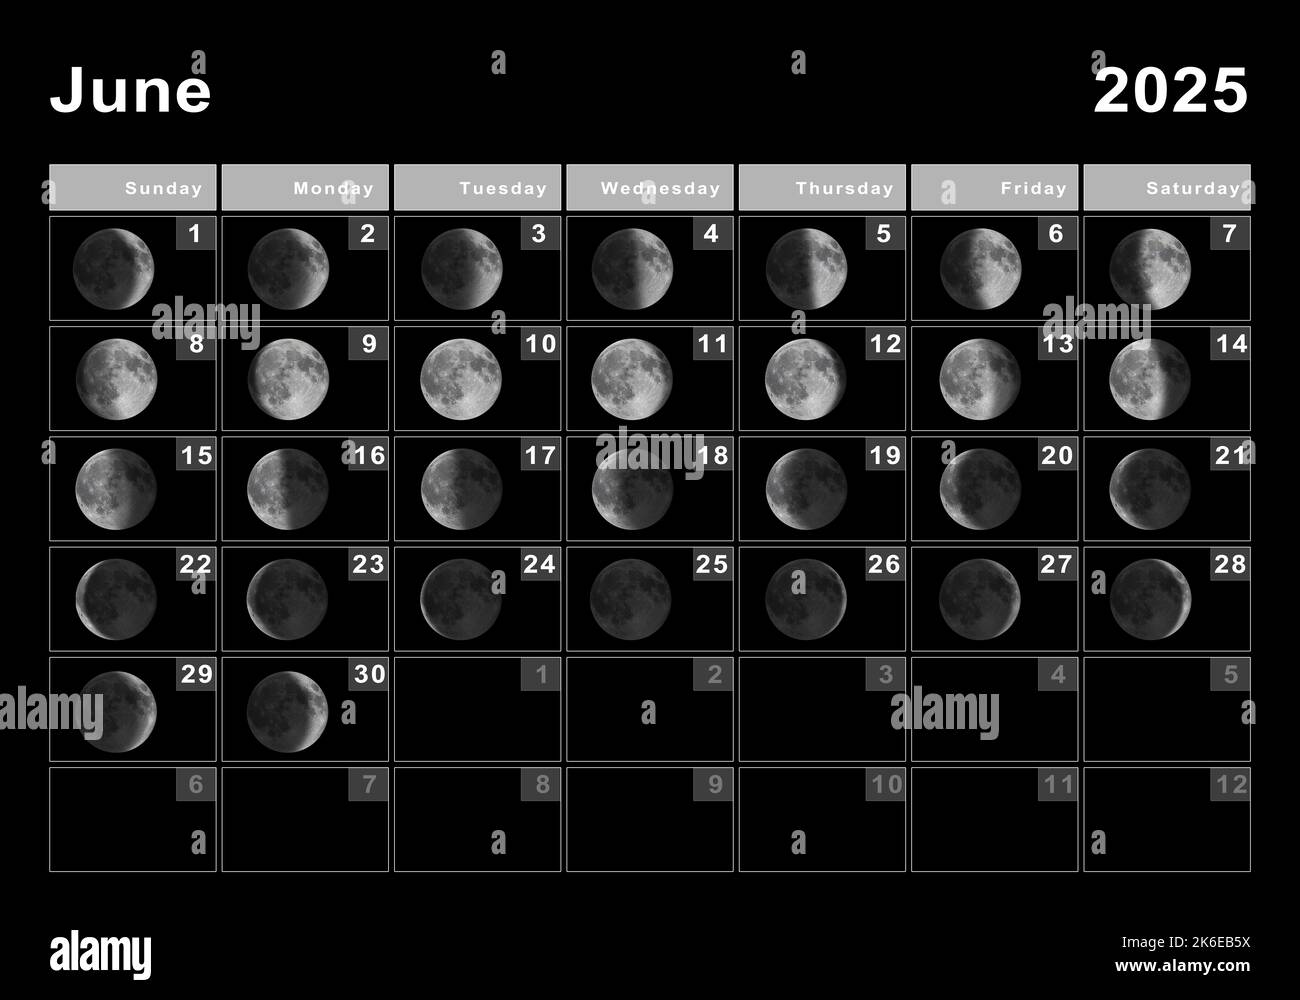 june-2025-lunar-calendar-moon-cycles-moon-phases-stock-photo-alamy